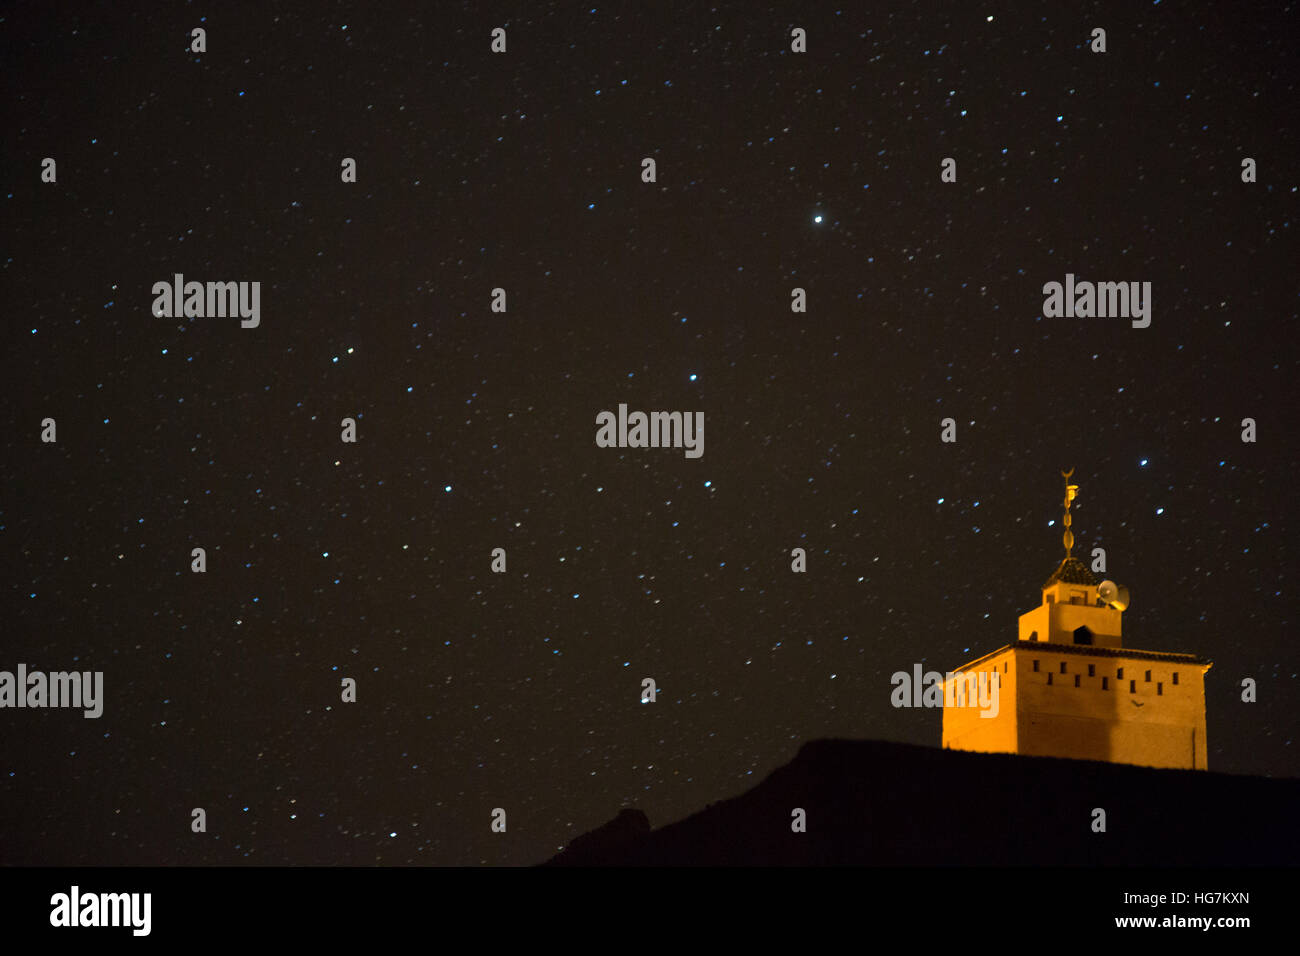 Ksar Elkhorbat, Marokko.  Minarett und Sterne in der Nacht. Stockfoto